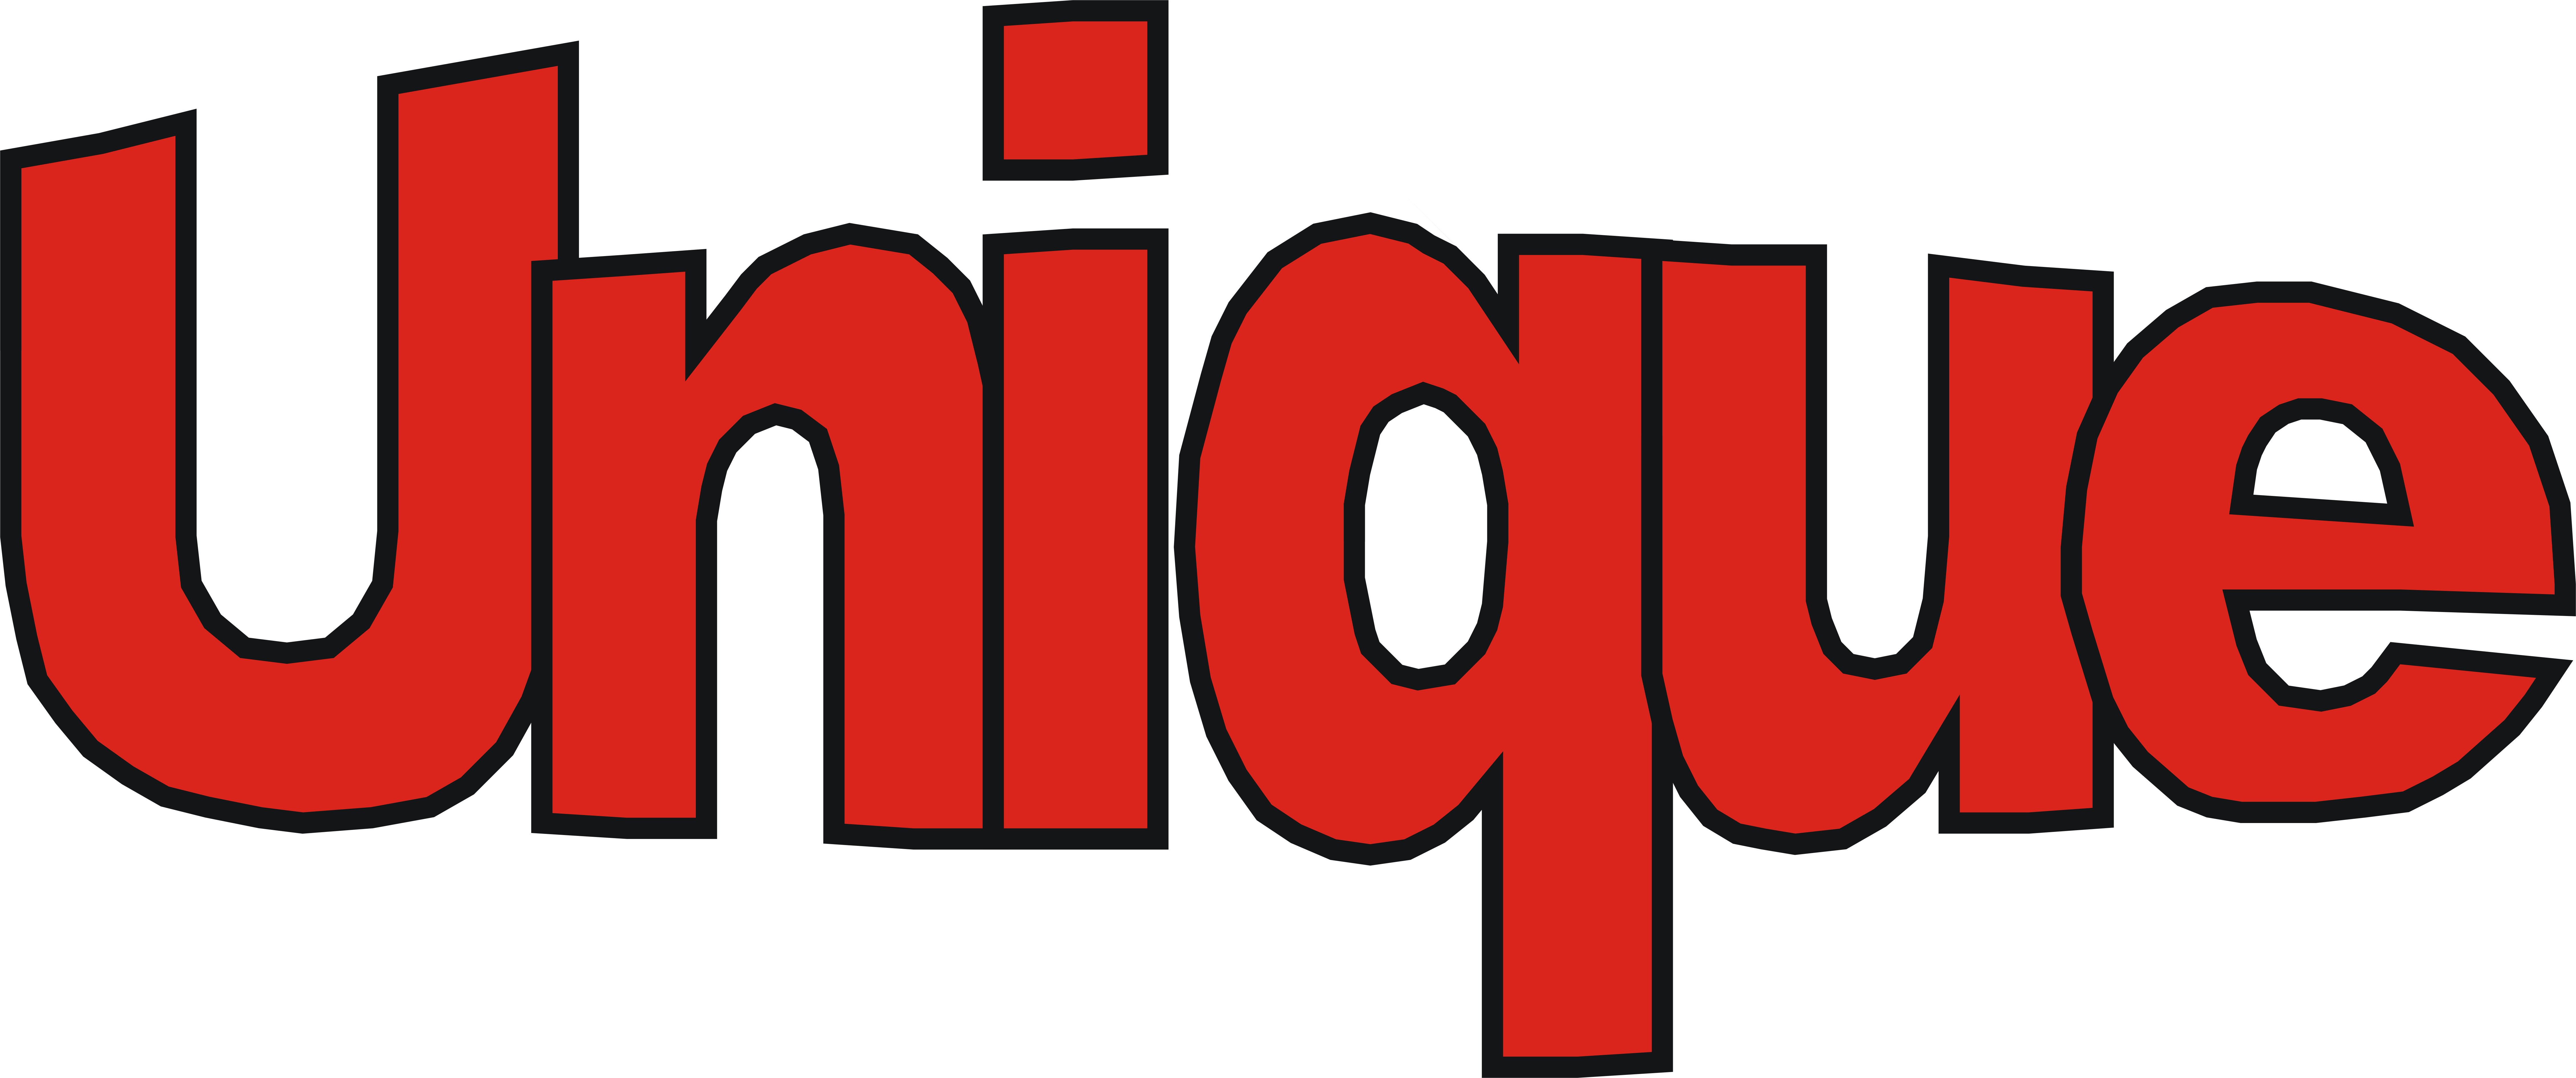 Unique слово. Unique картинка. Логотип unique Action. Unique надпись. Uniq лого.